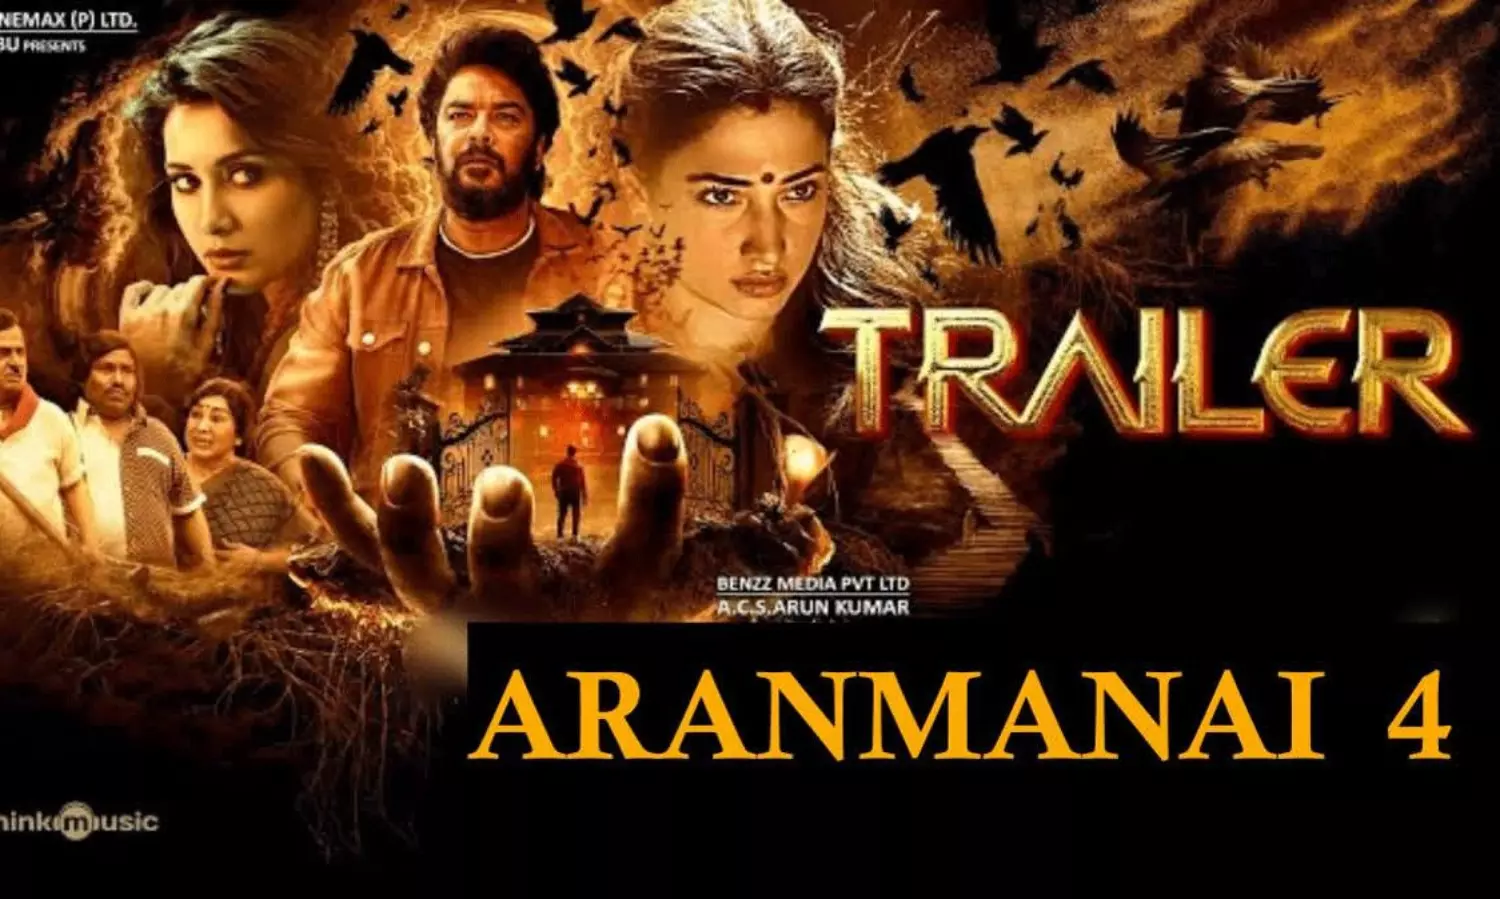 ‘Aranmanai 4’ trailer release: कॉमेडी-हॉरर फिल्म ‘अरनमनई 4’ का दमदार ट्रेलर रिलीज